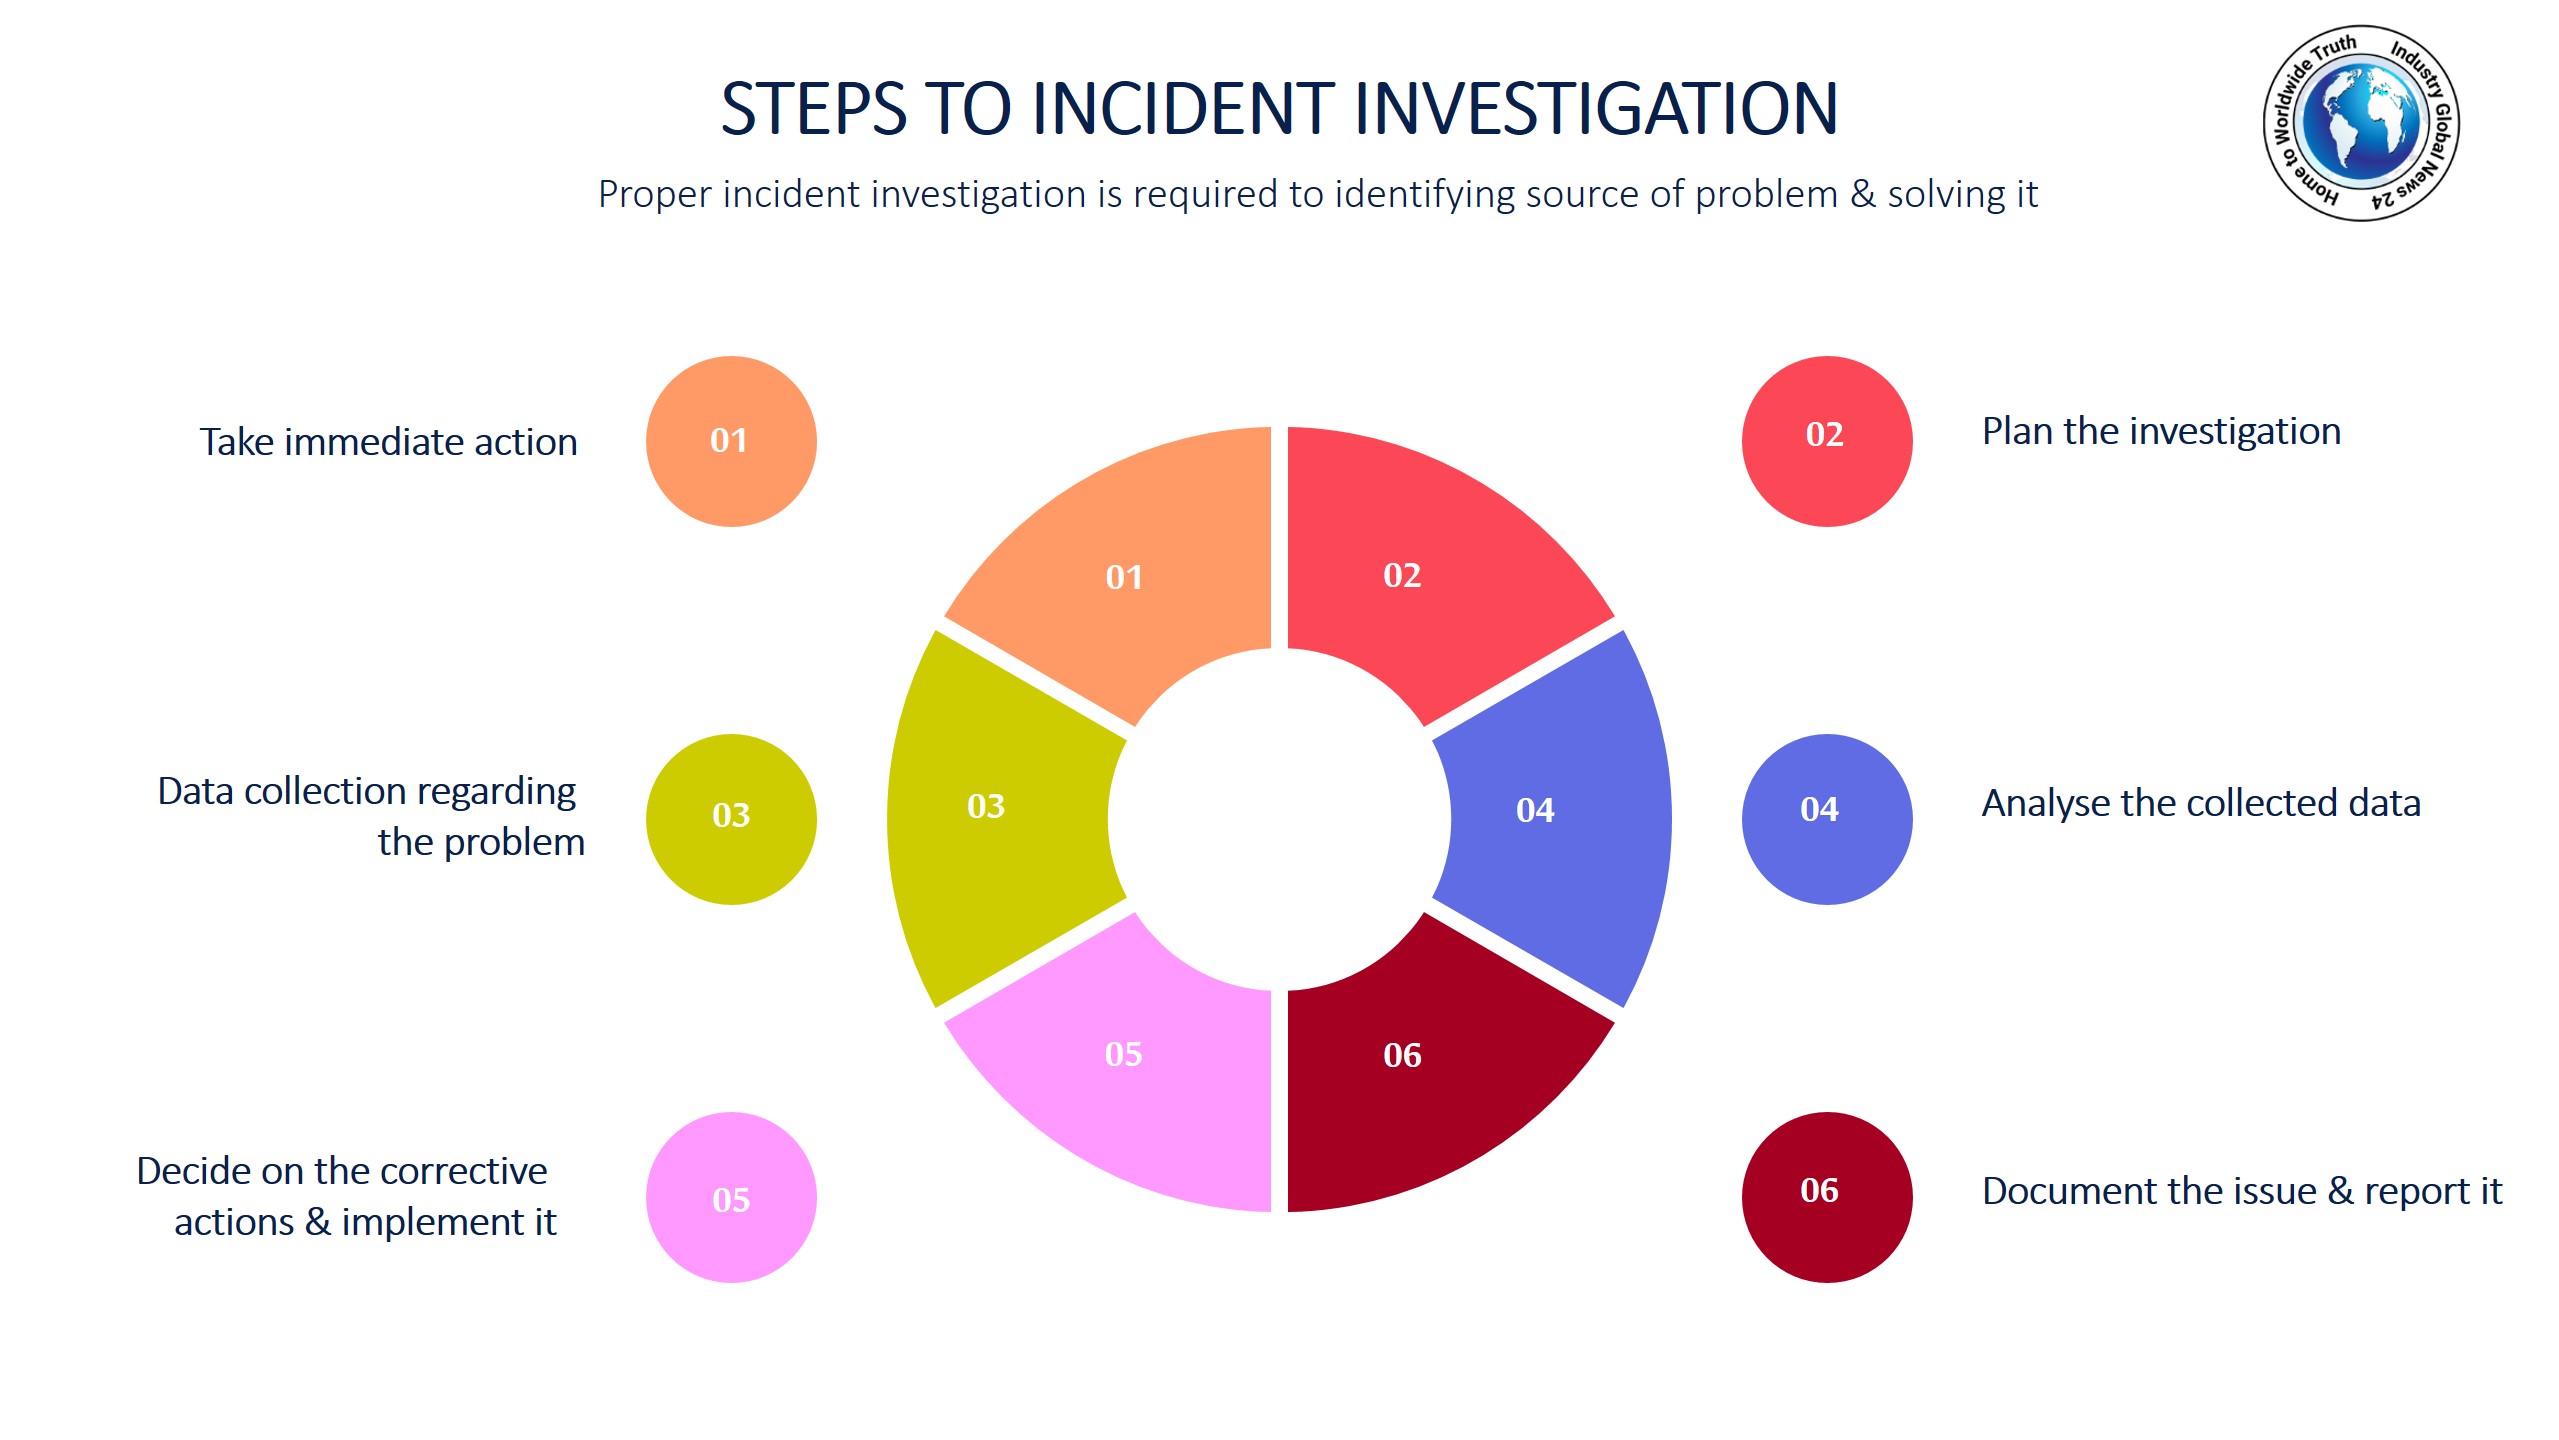 Steps to incident investigation